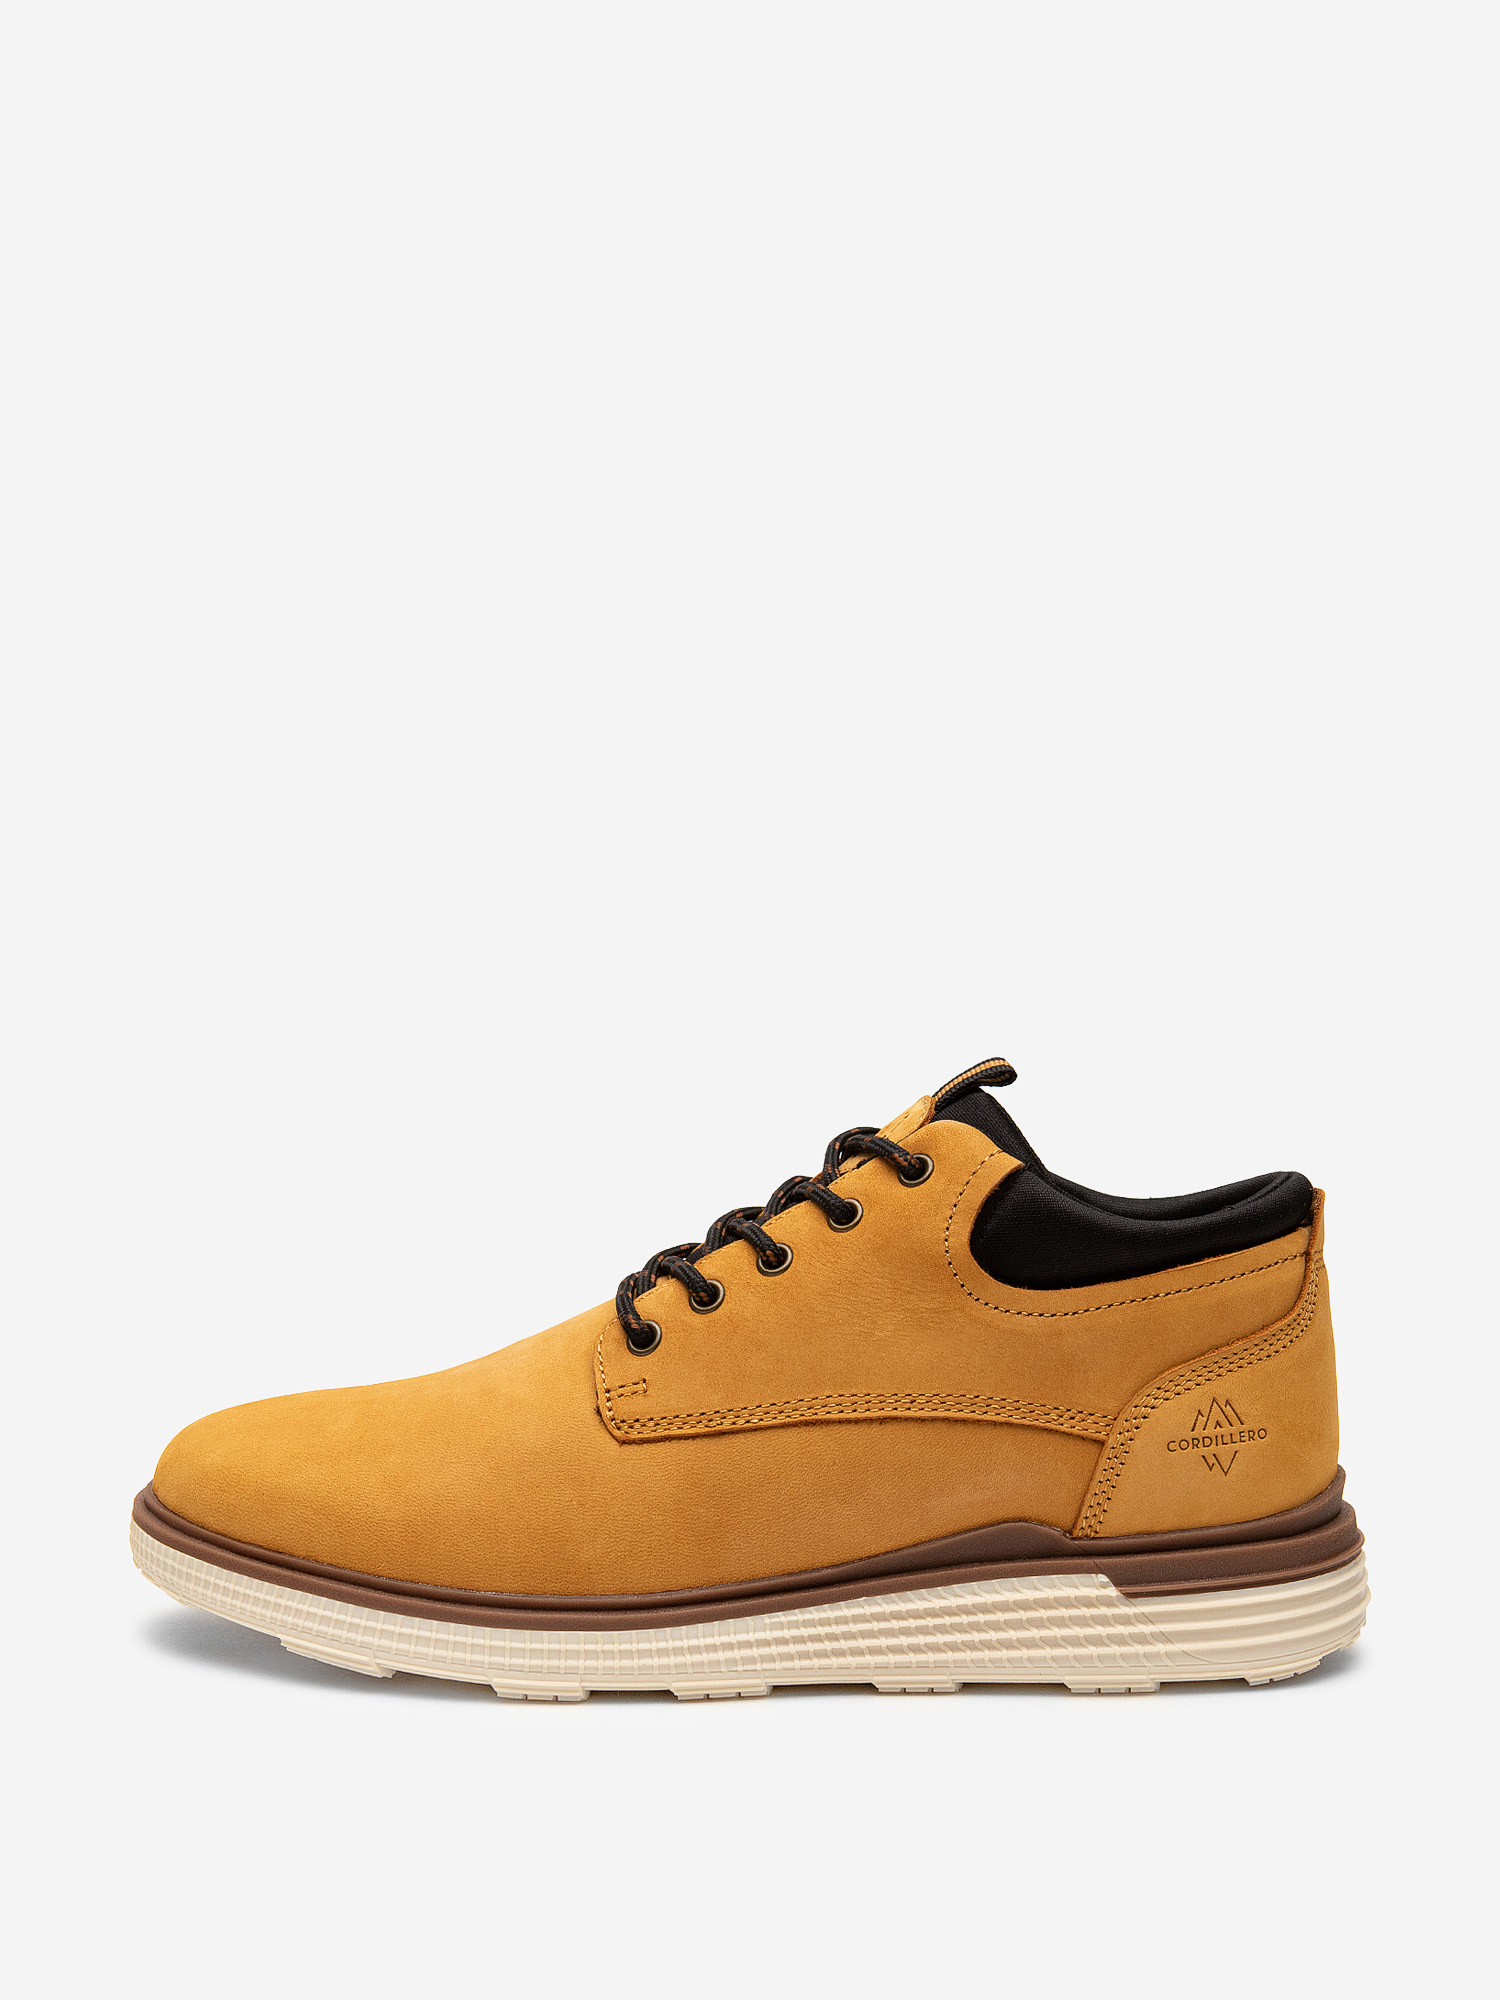 Ботинки мужские Cordillero Zircon, Желтый ботинки мужские cordillero zircon желтый